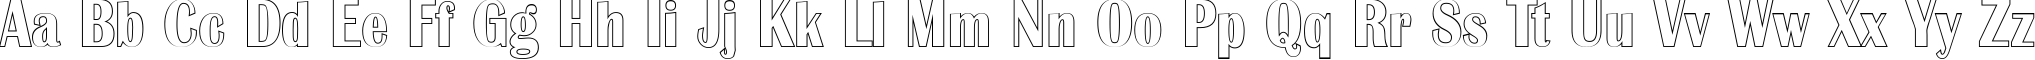 Пример написания английского алфавита шрифтом a_AlbionicNrOtl